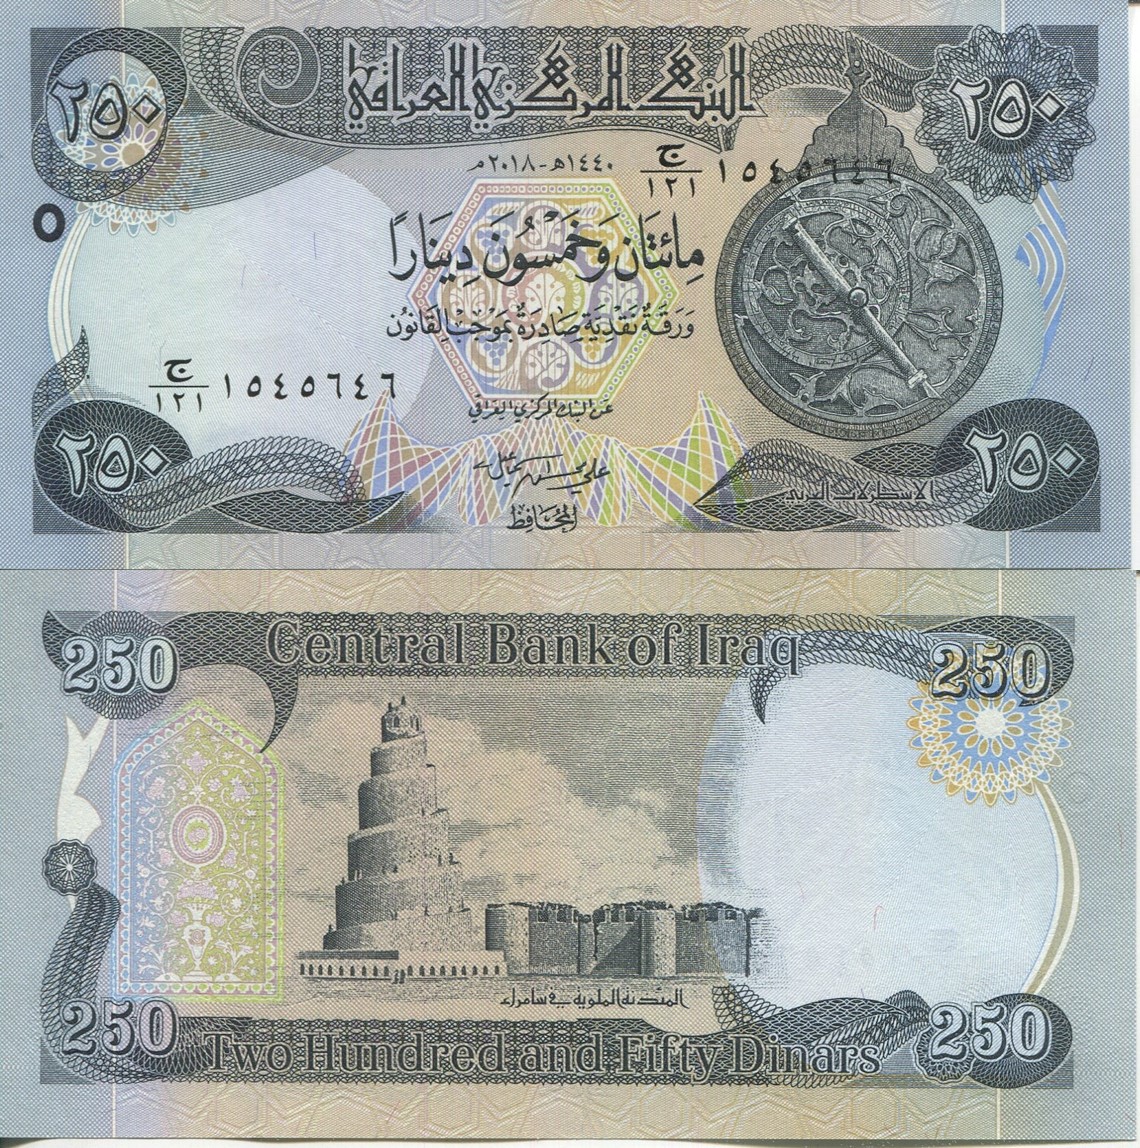 2019 IQ 250 dinar.jpg